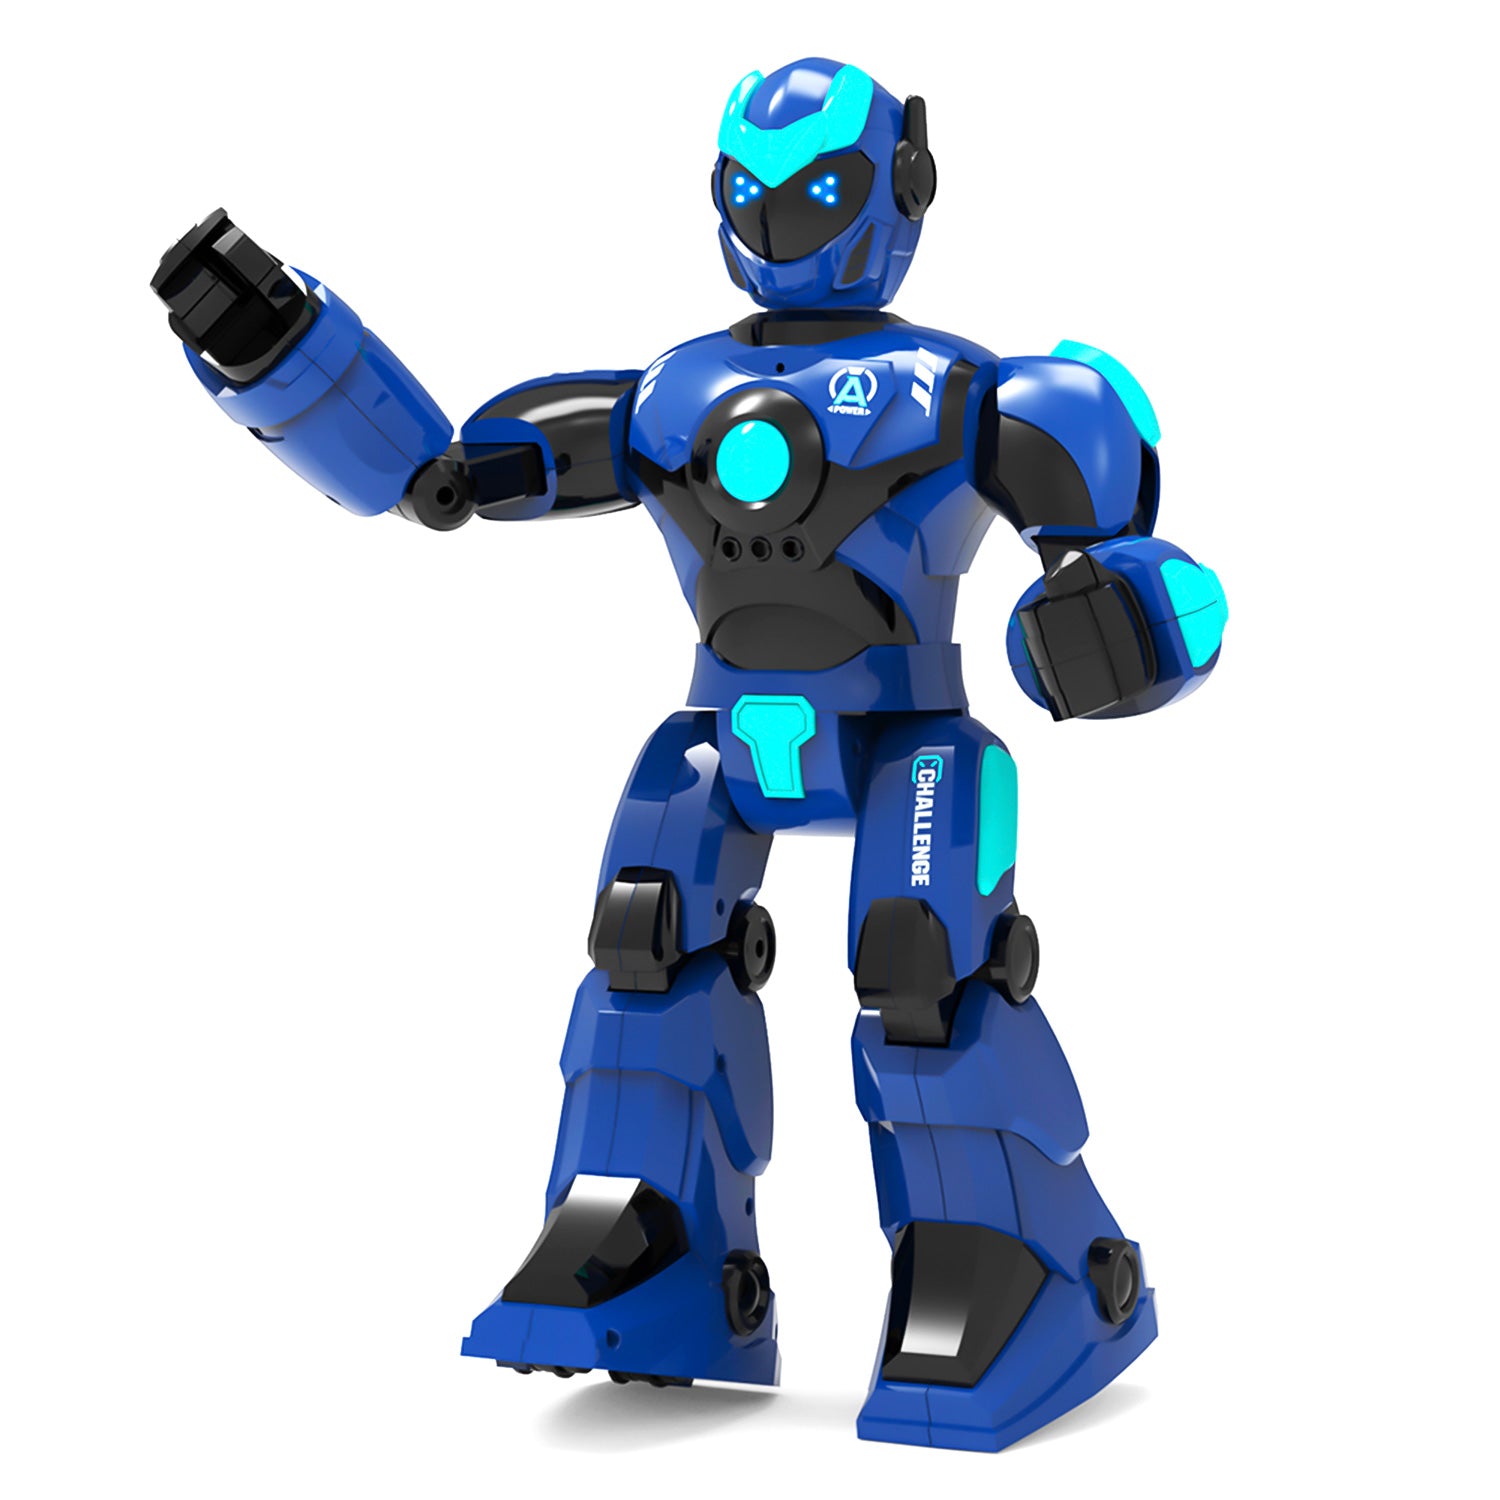 STEMTRON Intelligent Voice Controlled Smart Remote Control Robot(Blue)